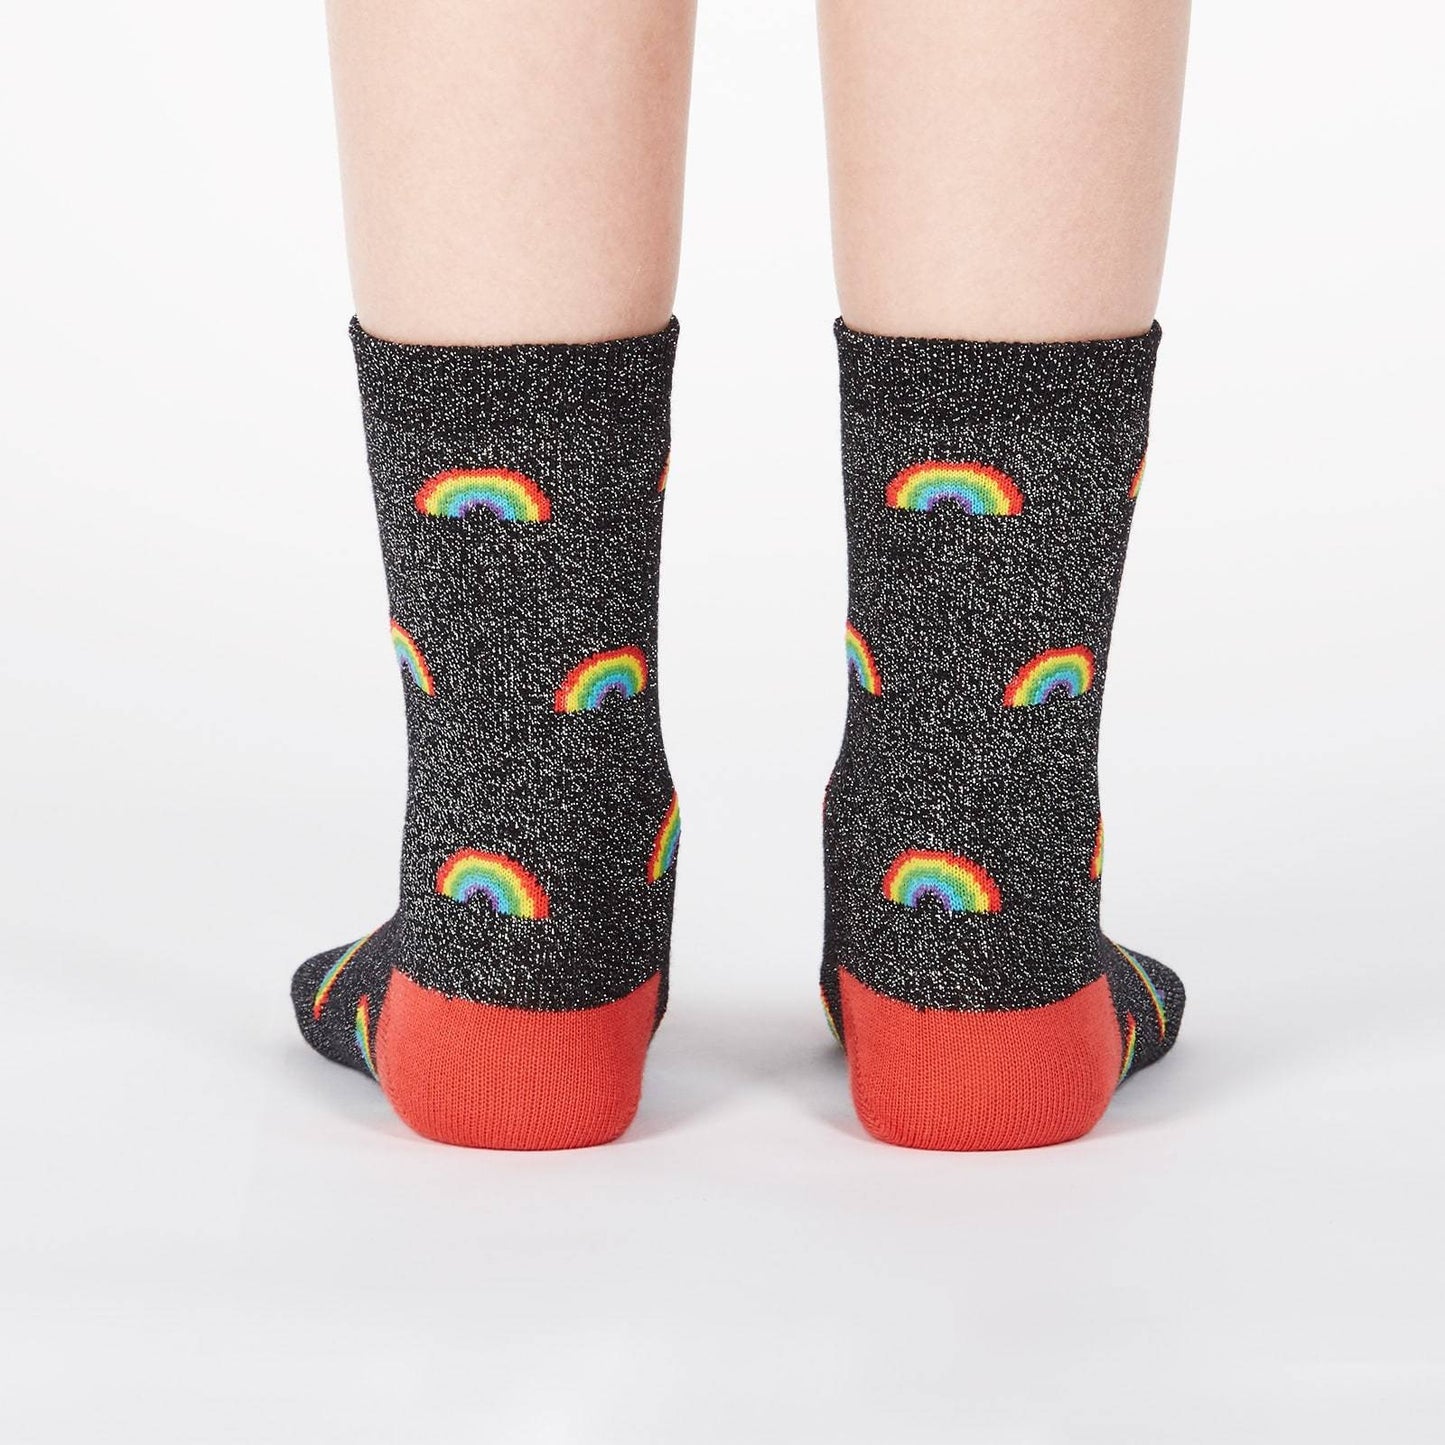 Sock it to Me Glitter over the Rainbow Junior (aged 7-10) Crew Socks